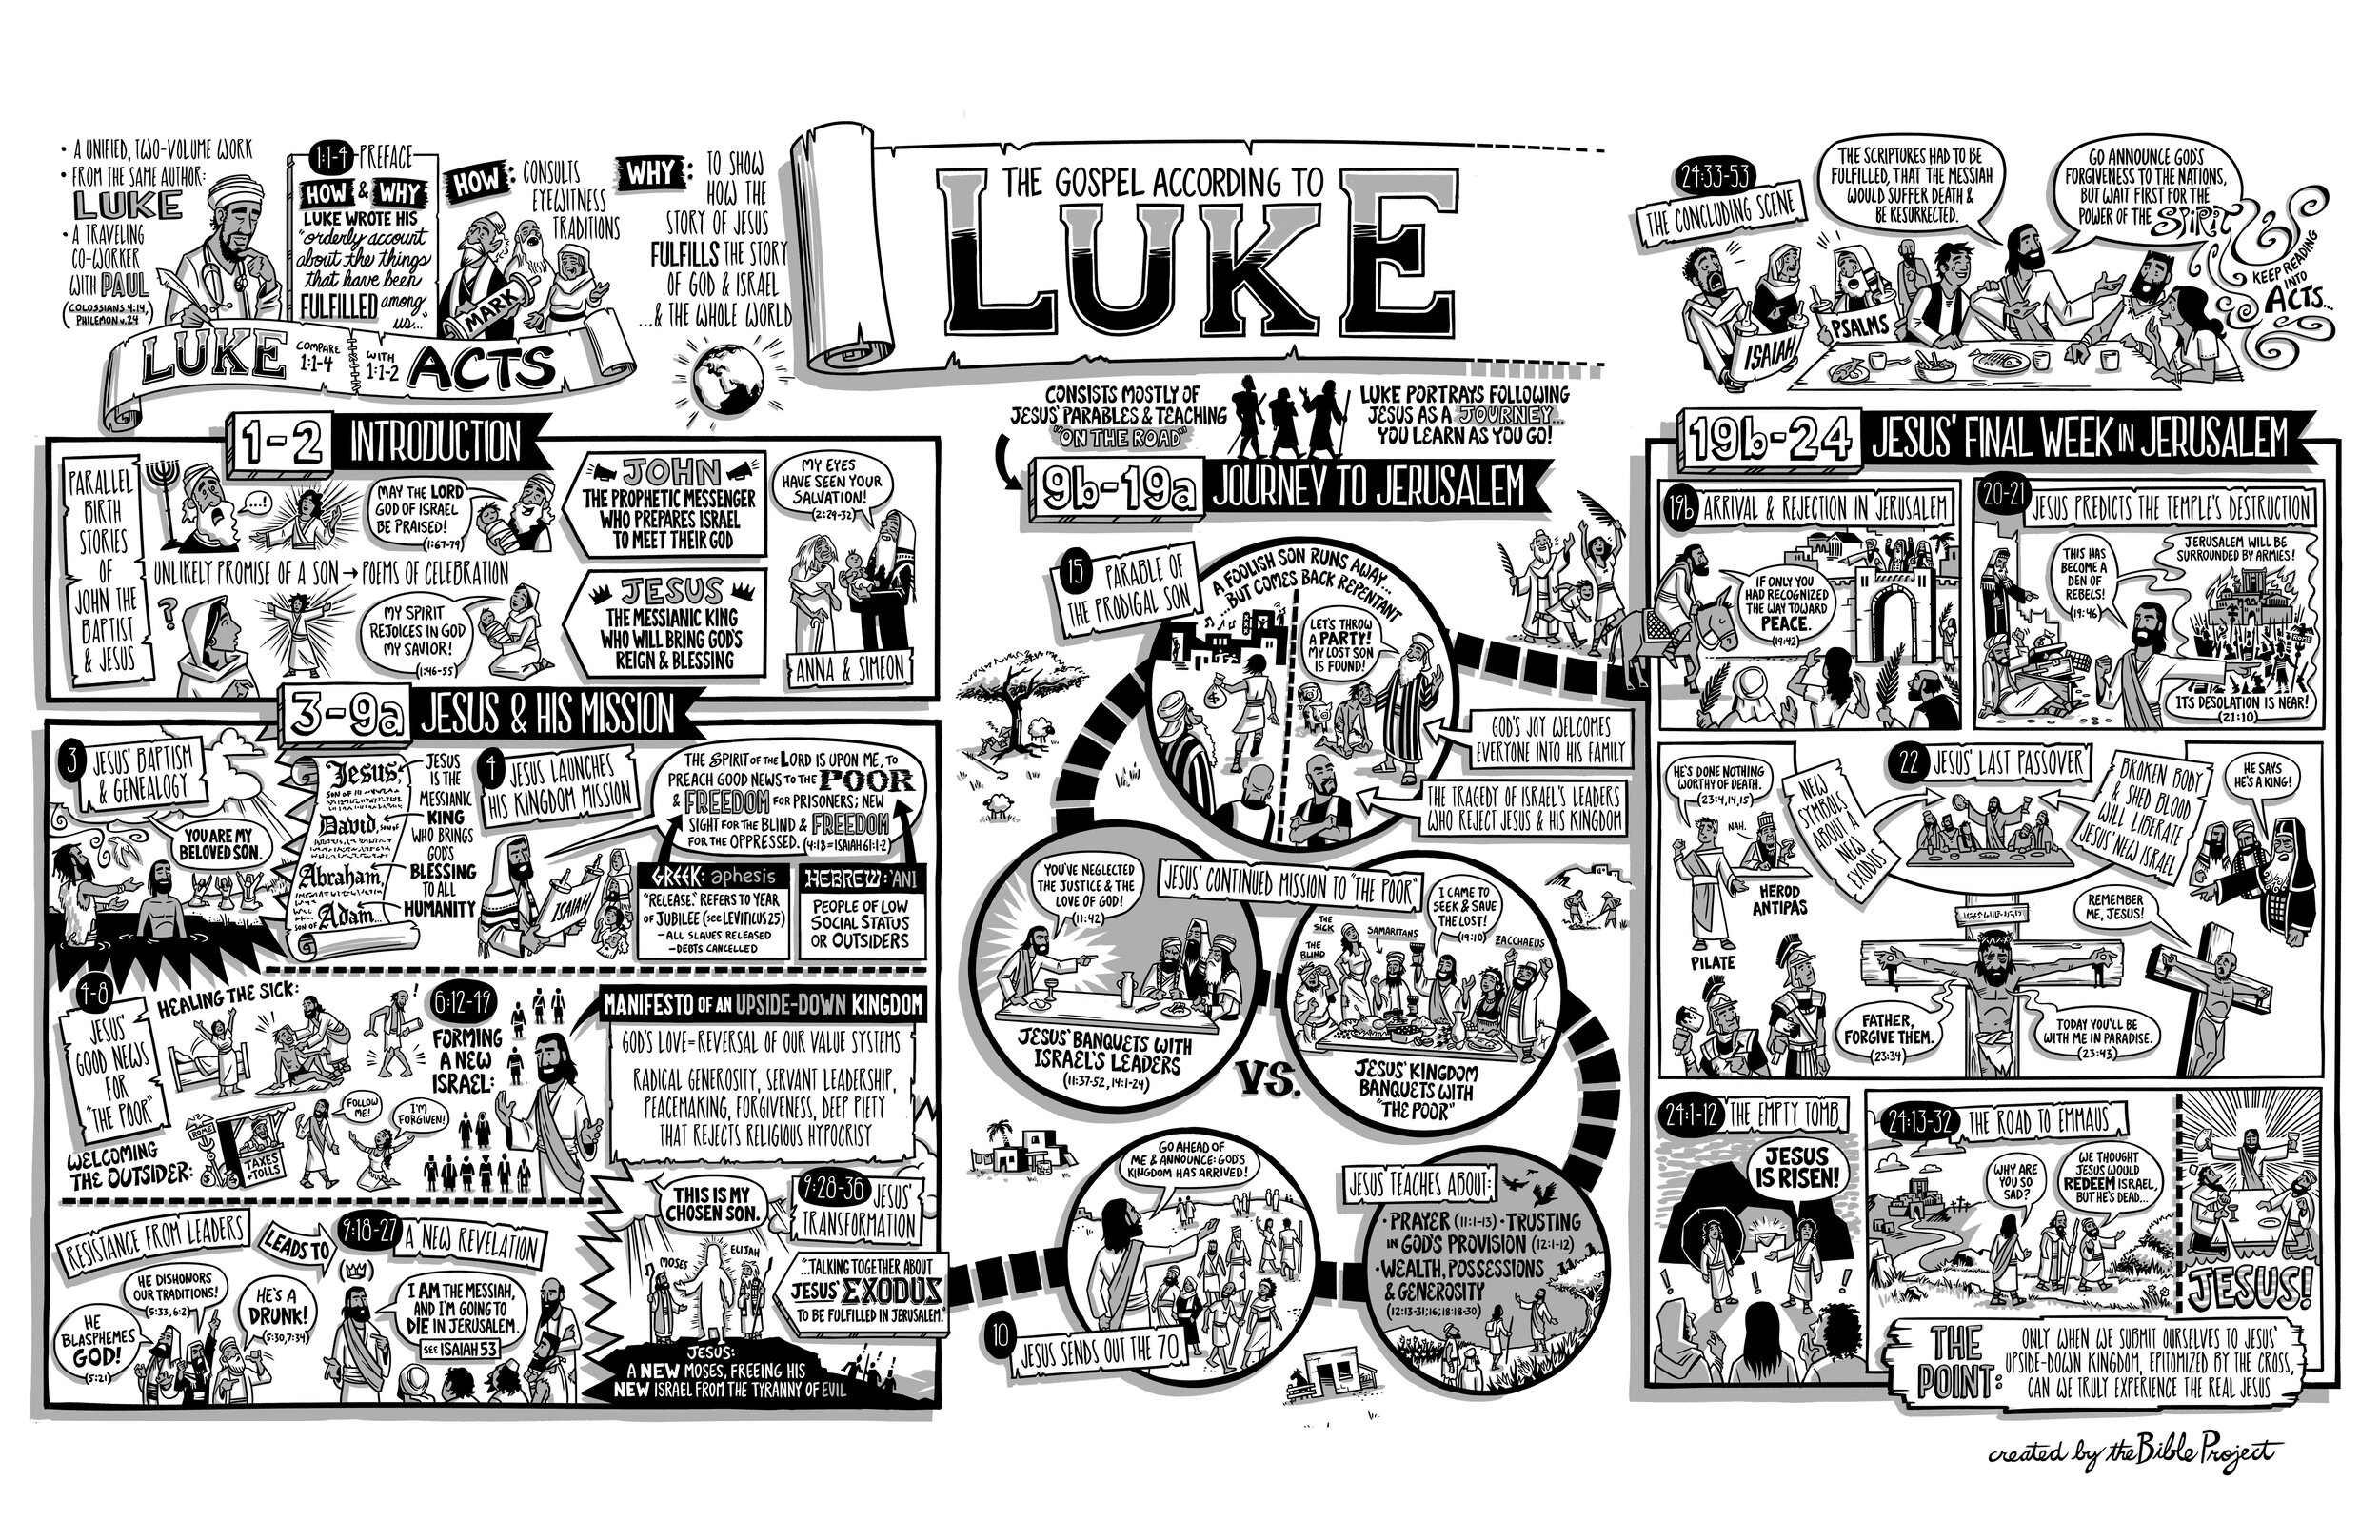 BibleProject: Luke (Video)